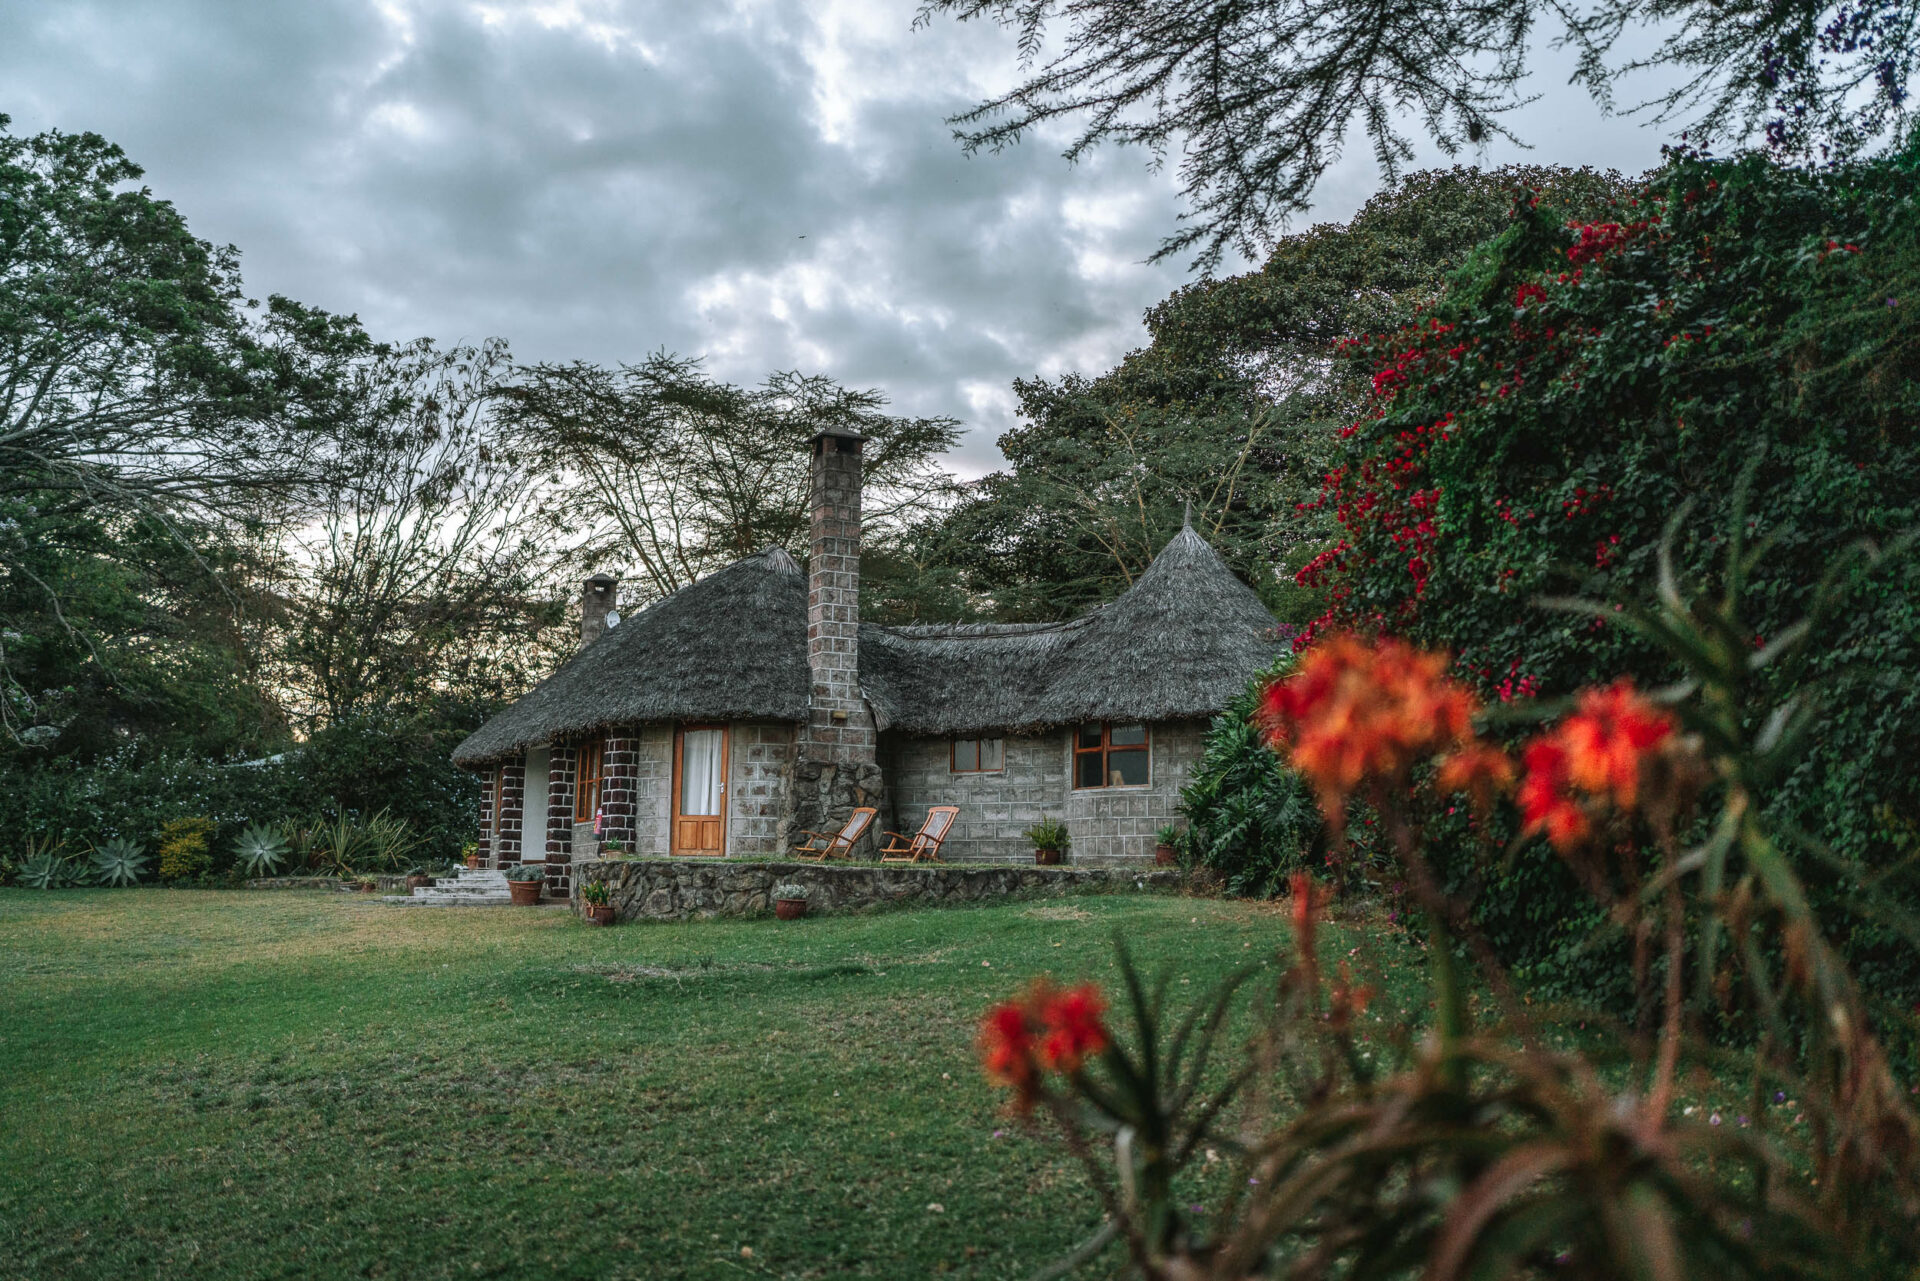 Kenya safari: Governor's Loldia House